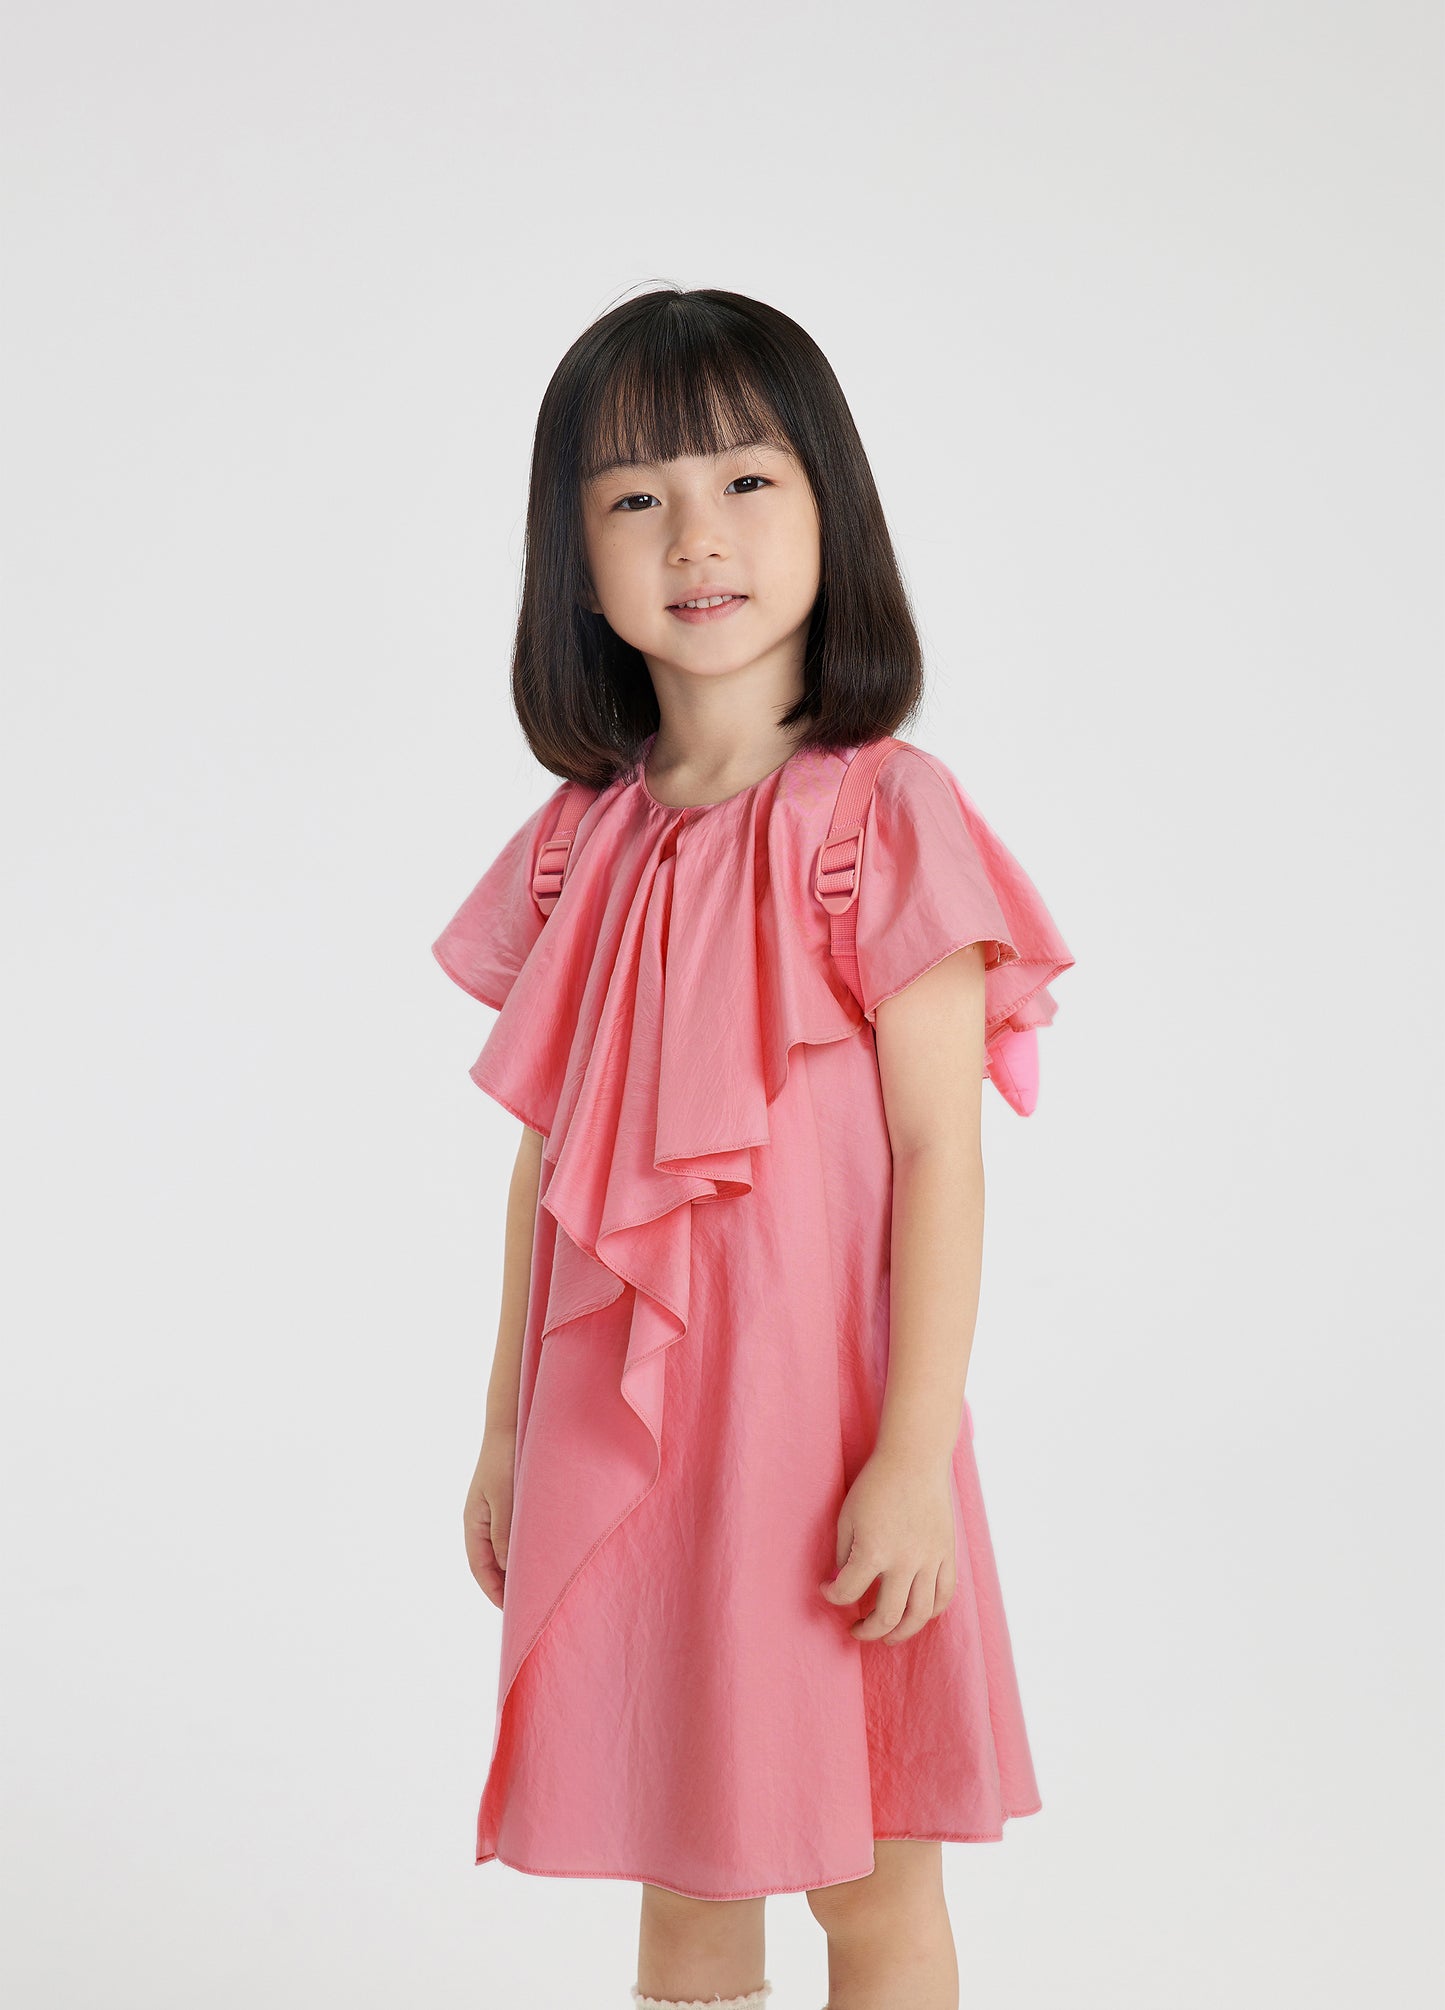 JNBY S/S Dress w/ Ruffle Top _Pink 1M5G31200-661